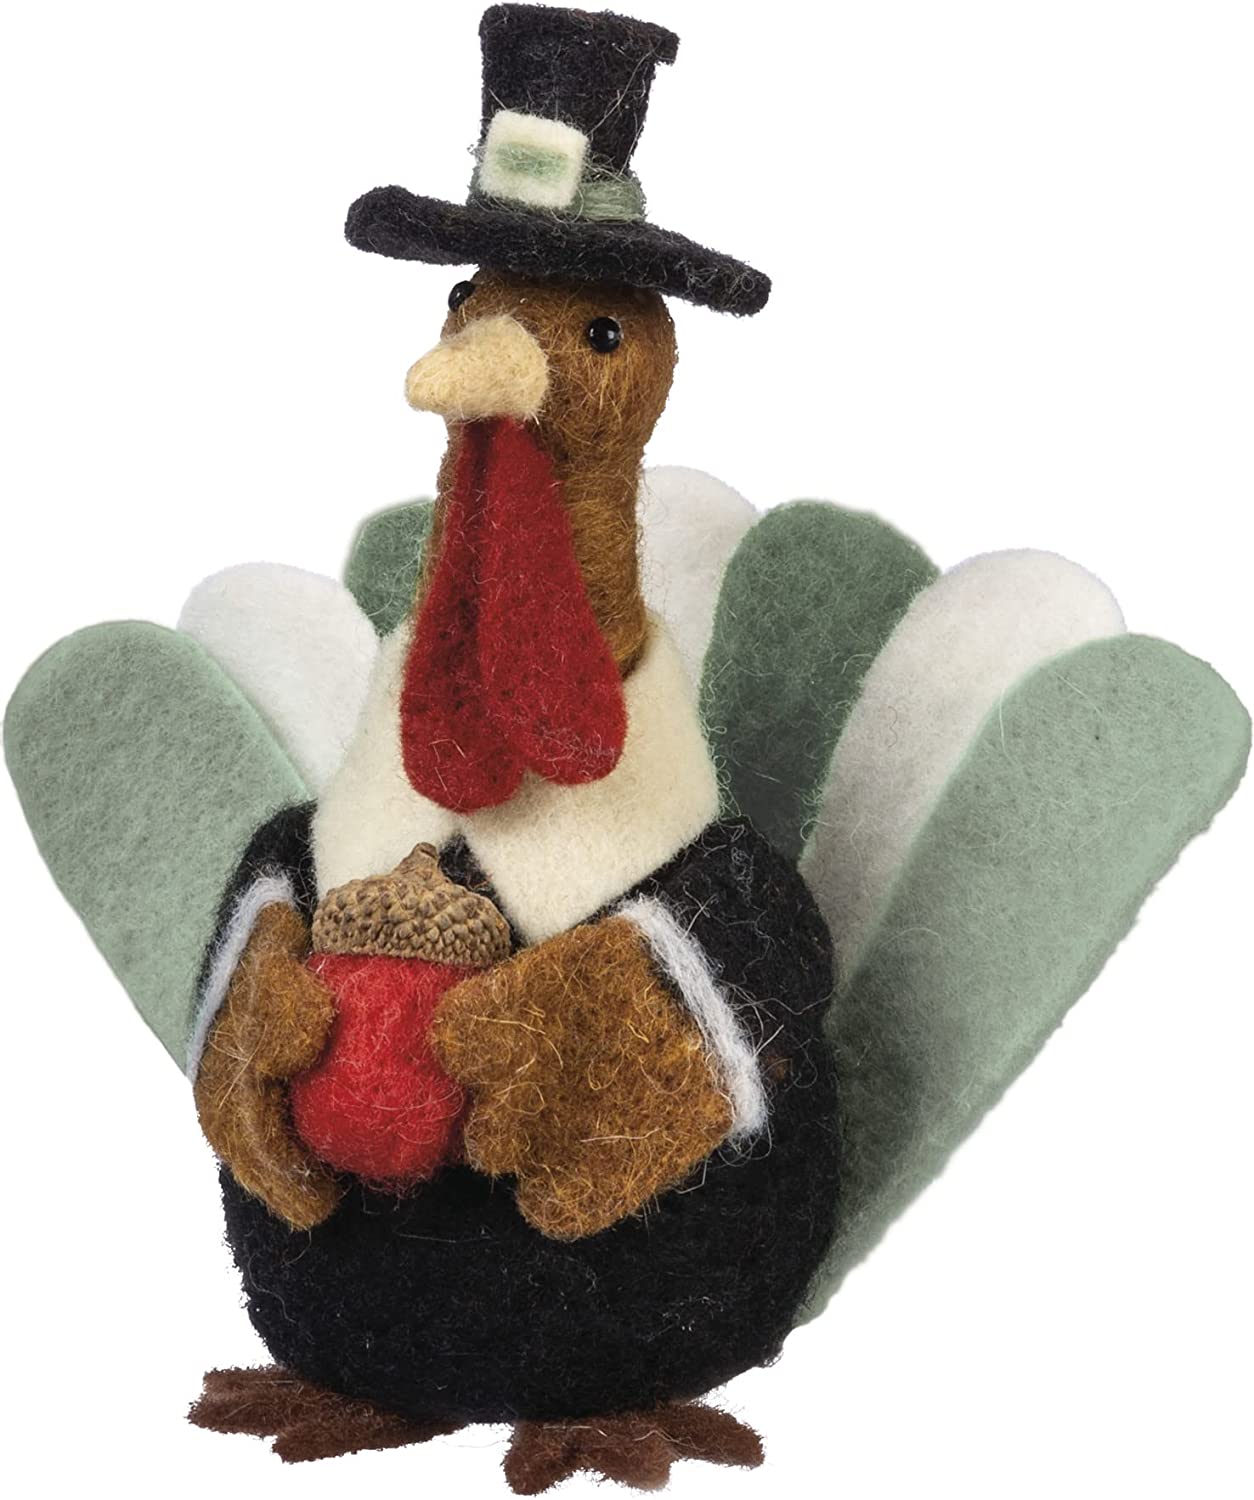 Primitives by Kathy Thanksgiving Felt Sitting Turkey